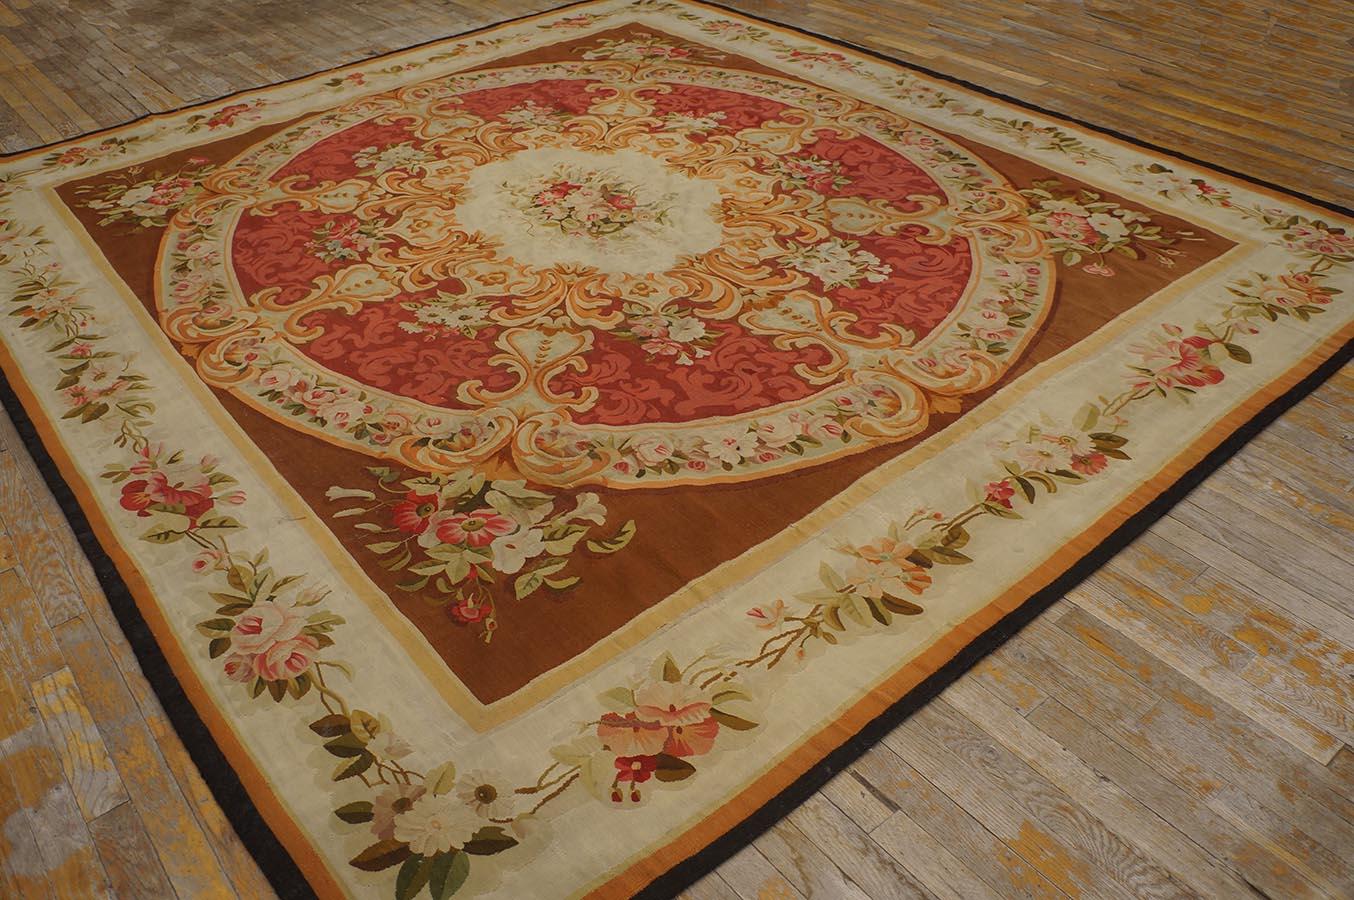 French Aubusson Carpet Circa 1870s From Napoleon III Period. 
(9'2